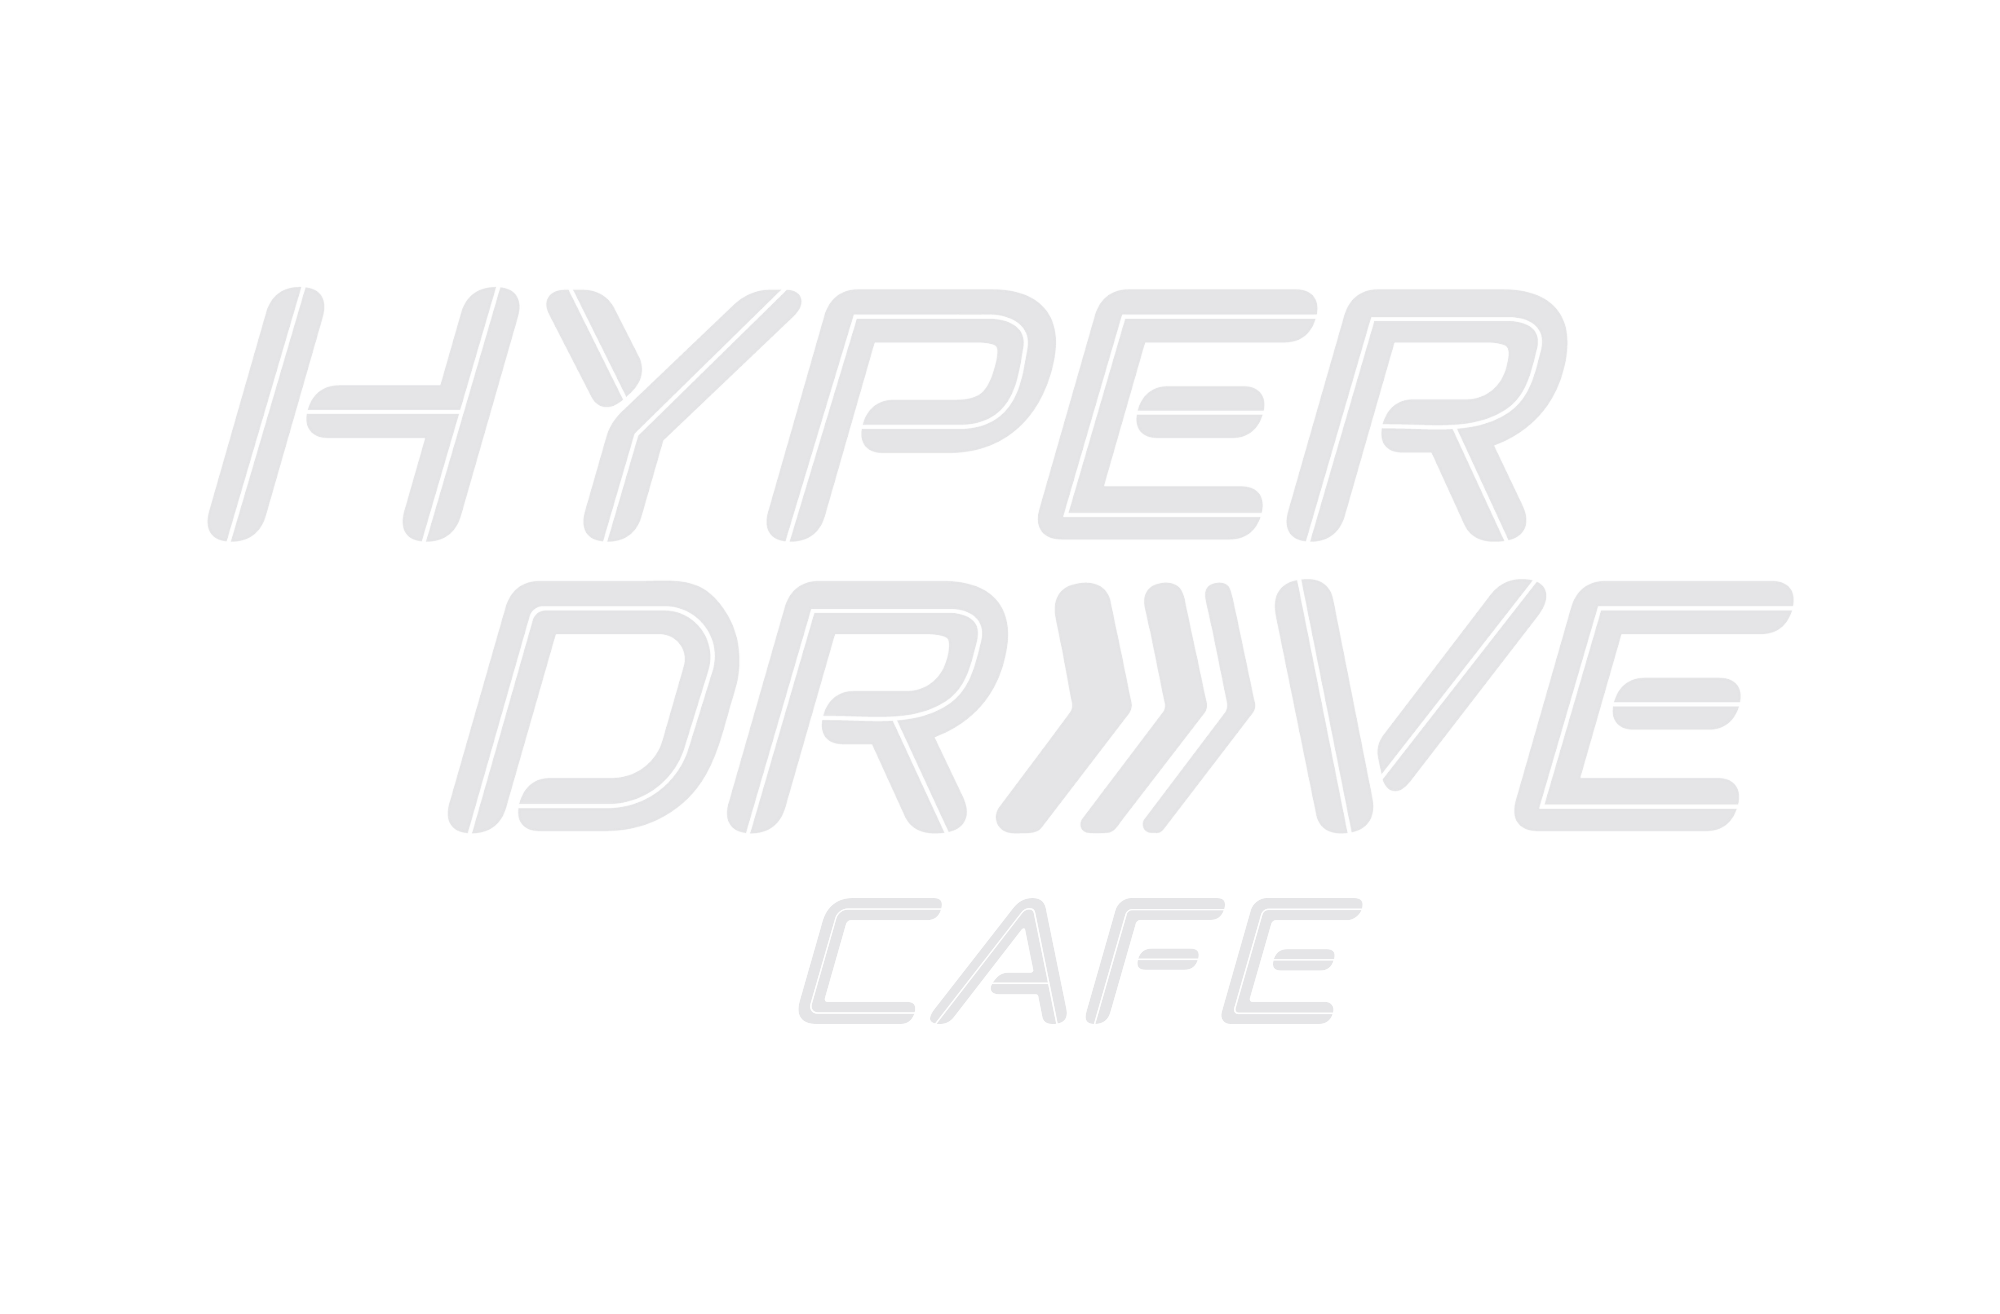 HyperDrive Cafe